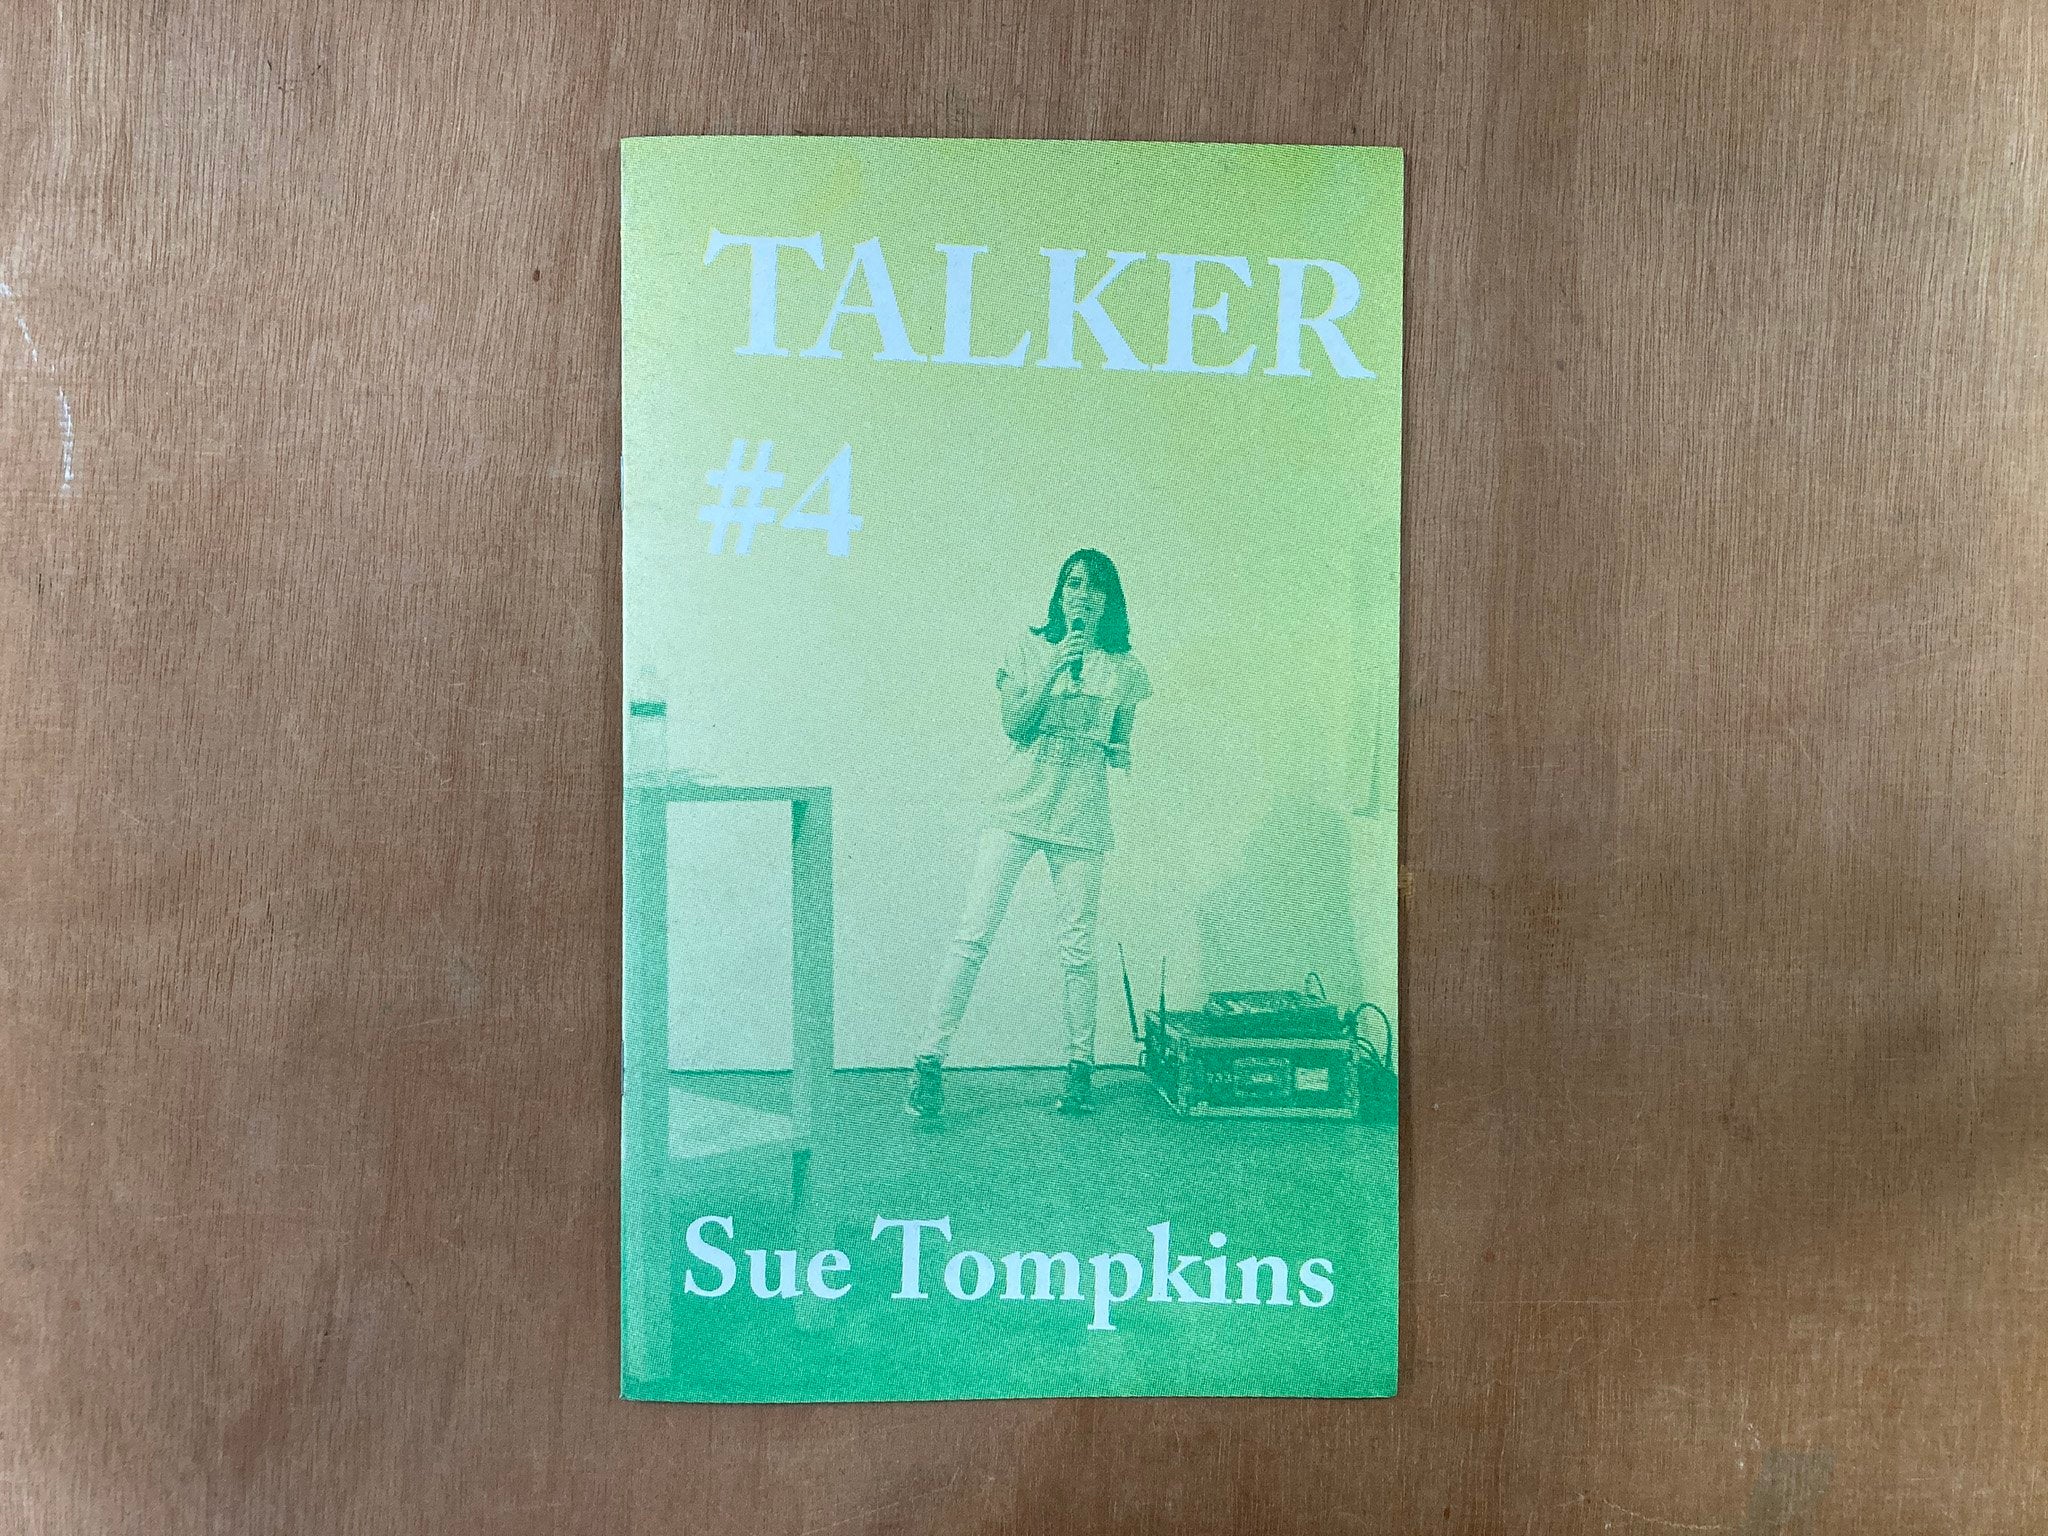 TALKER #4: SUE TOMPKINS by Giles Bailey